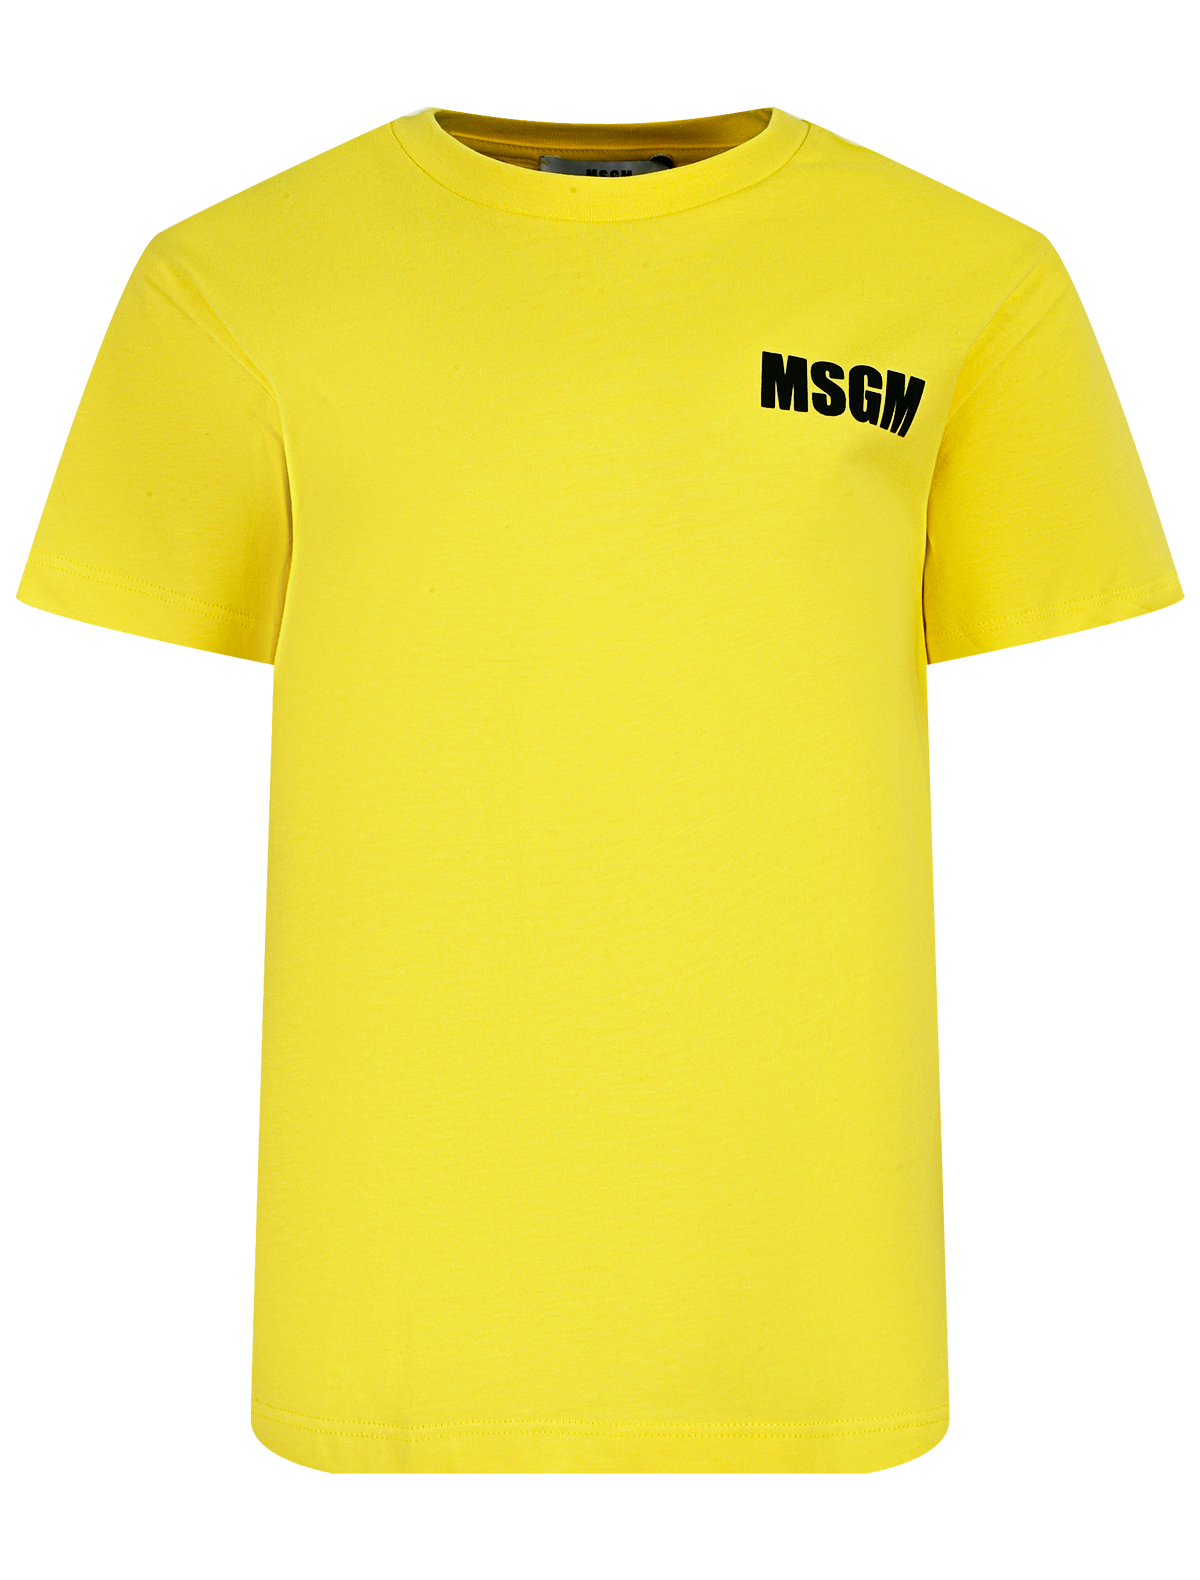 Футболка MSGM 2648593, цвет желтый, размер 7 1134529410992 - фото 1